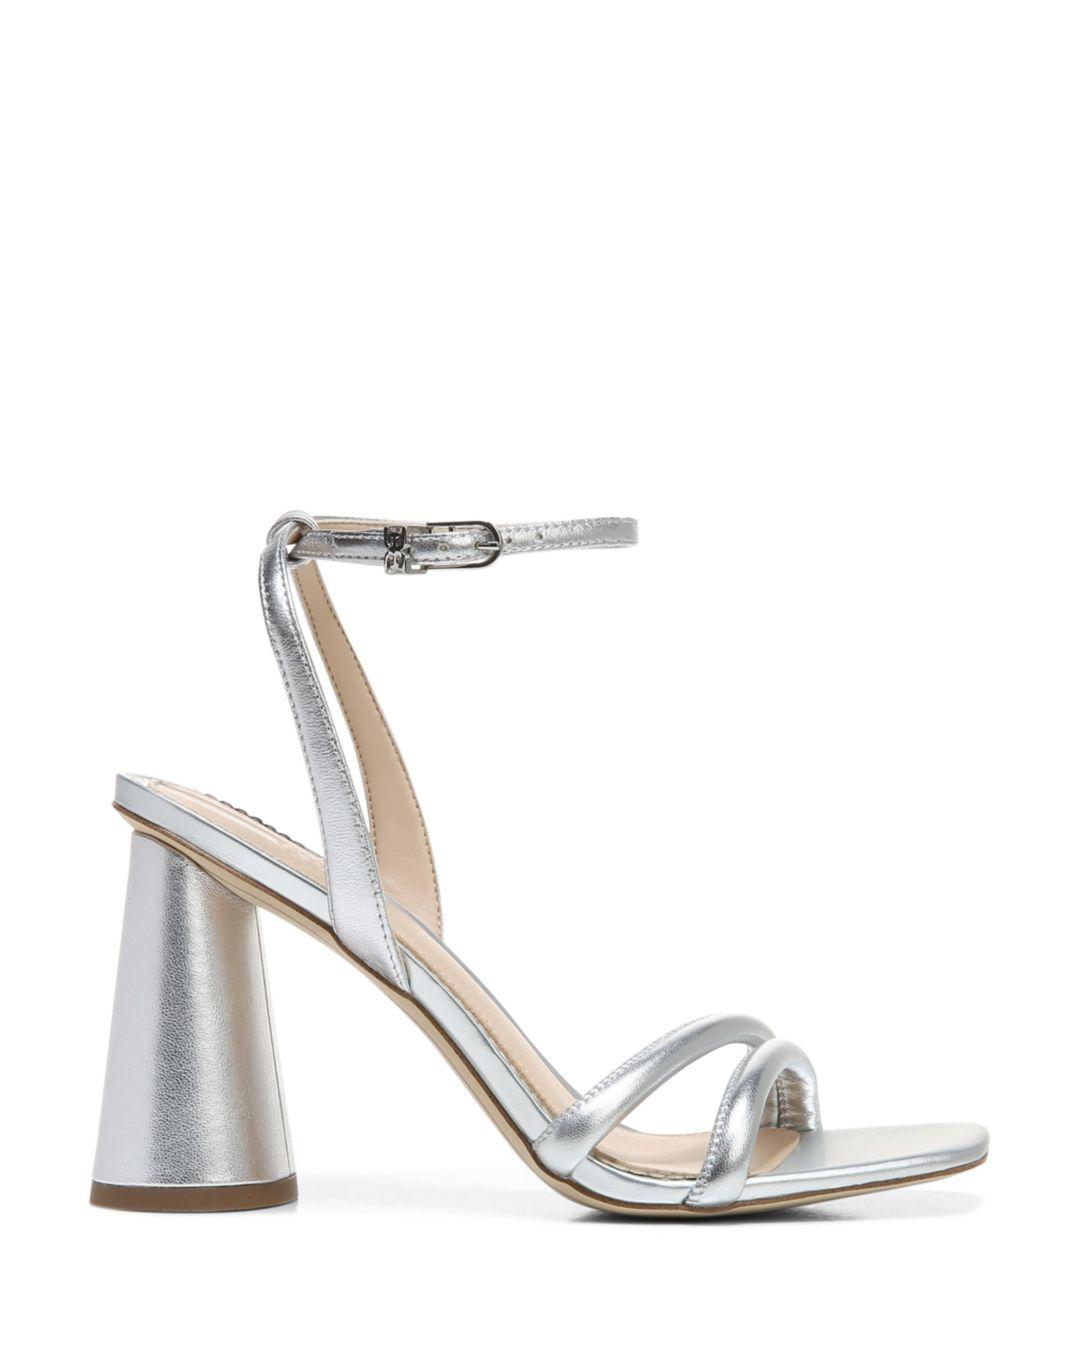 Sam Edelman Leather Kia Square Toe High Heel Sandals in Silver (Metallic) -  Lyst